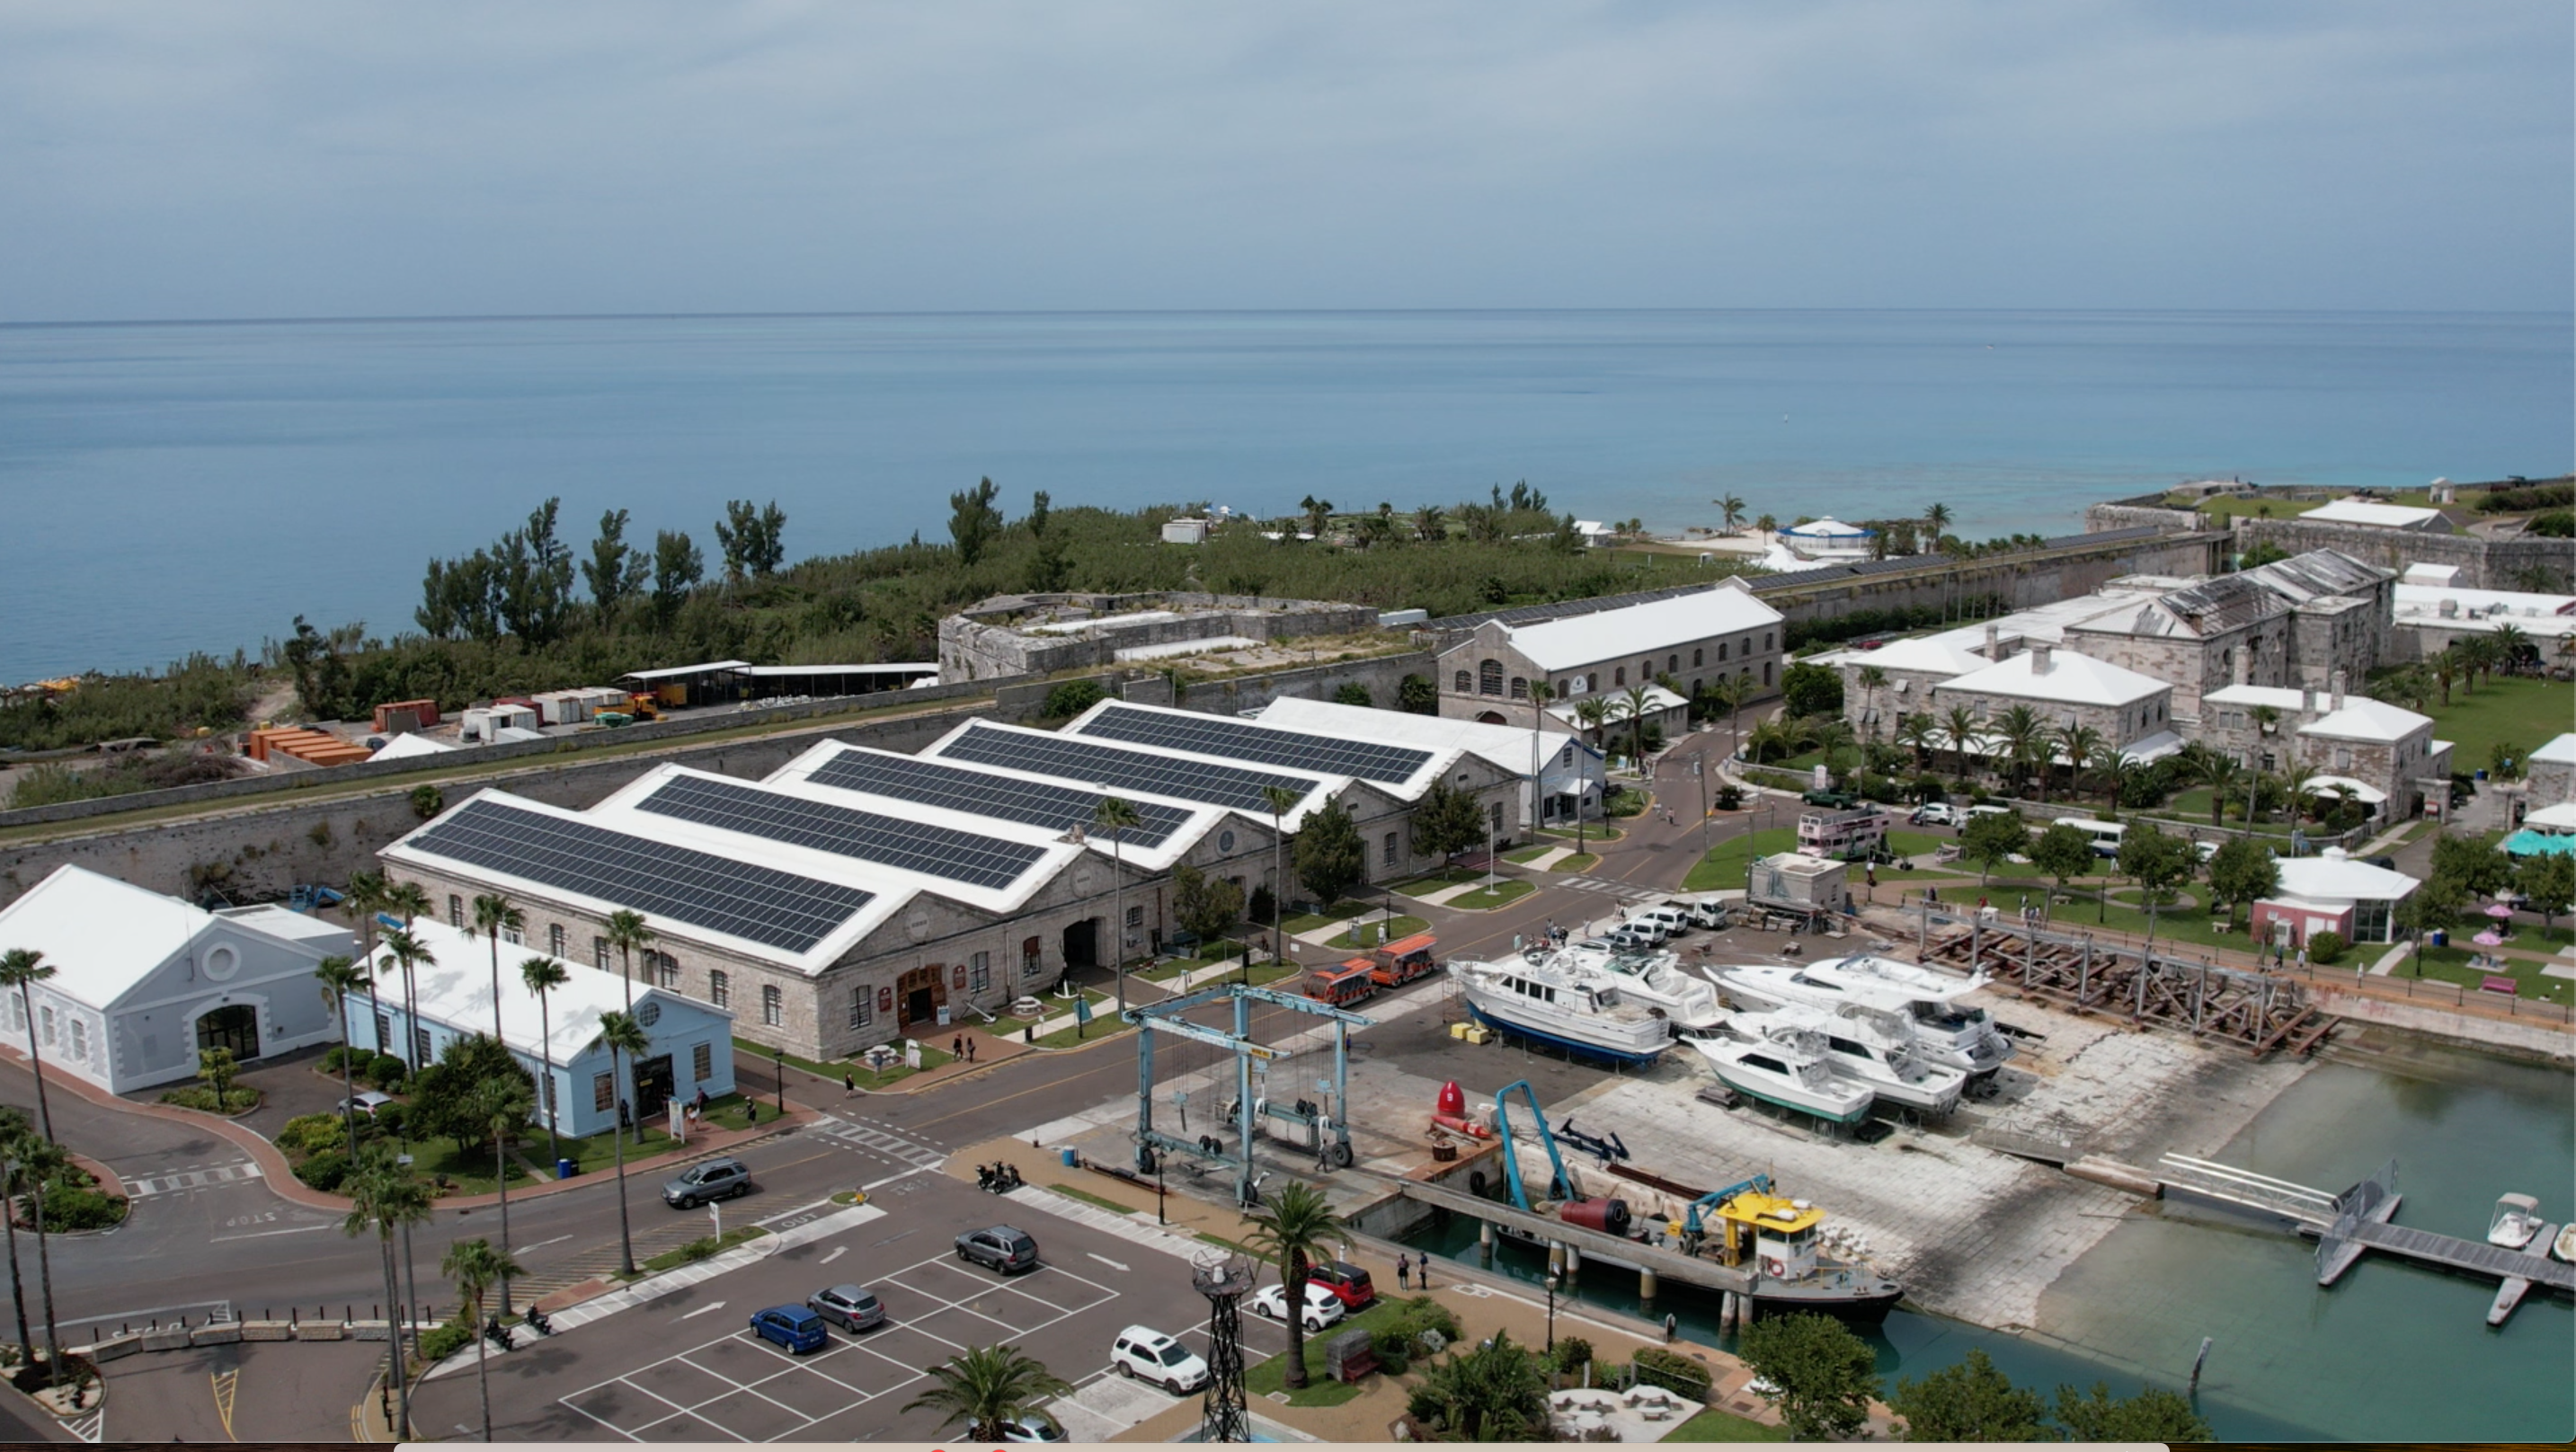 solar roofs on dockyard buildings